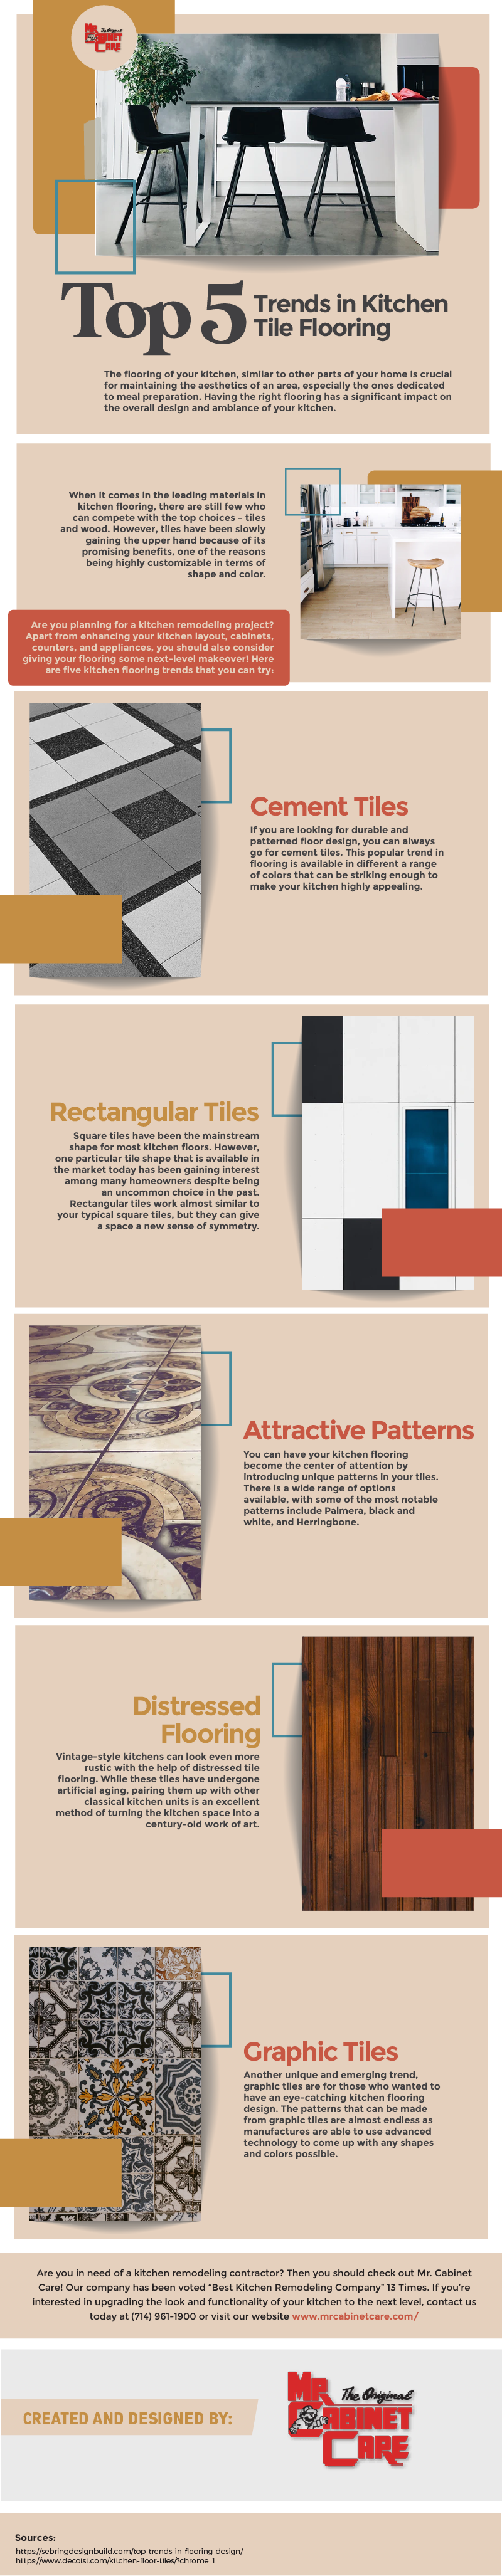 Top 5 Trends in Kitchen Tile Flooring - Infographic